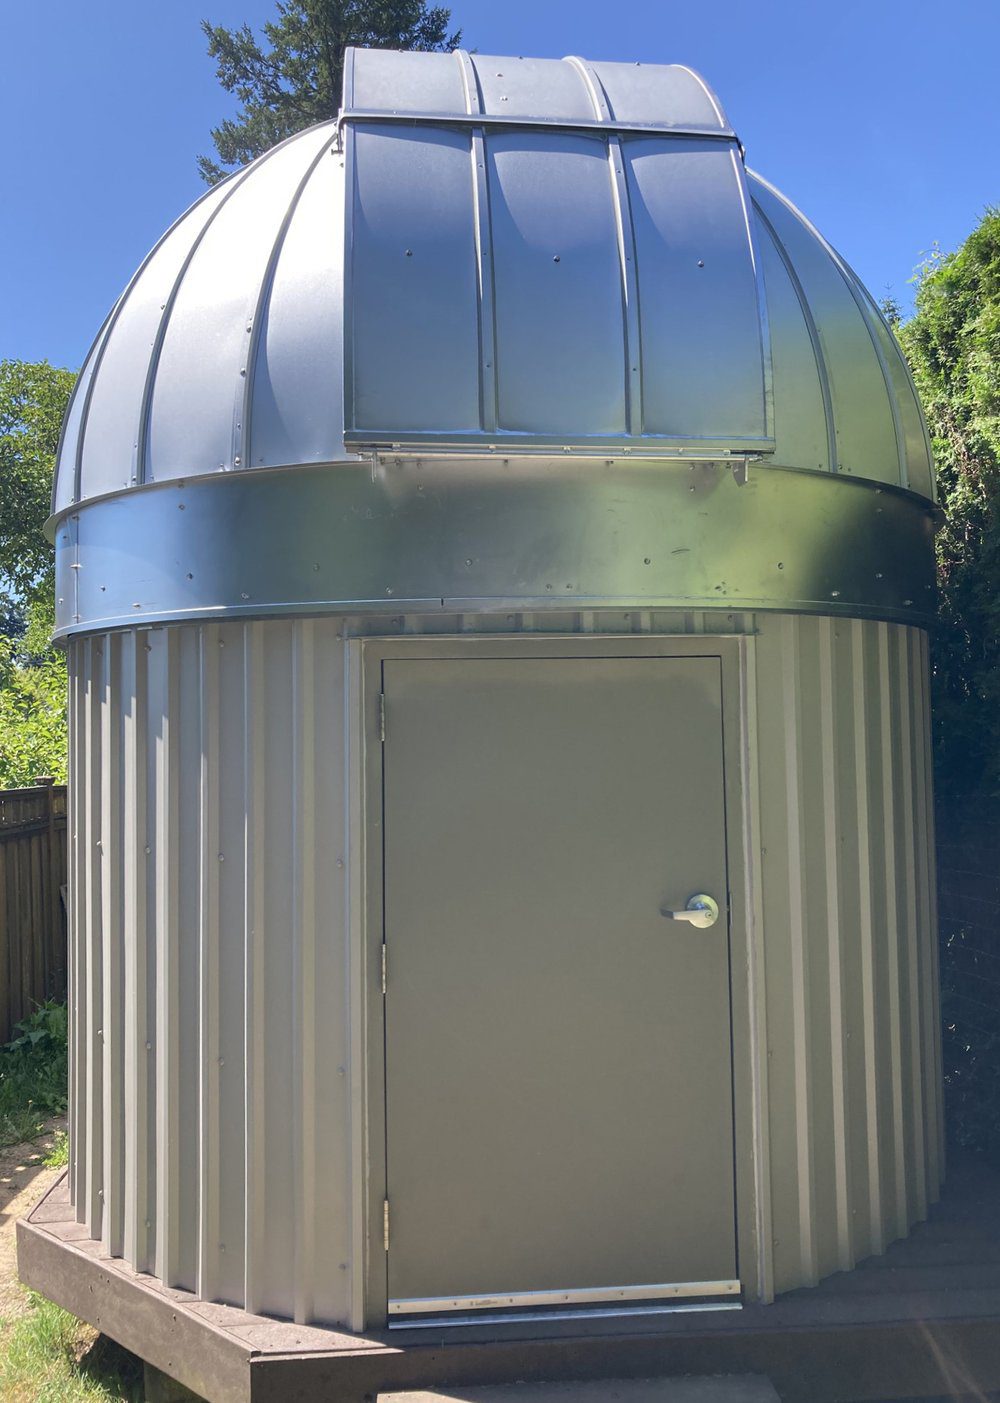 Pommier Observatory Post Thumbnail